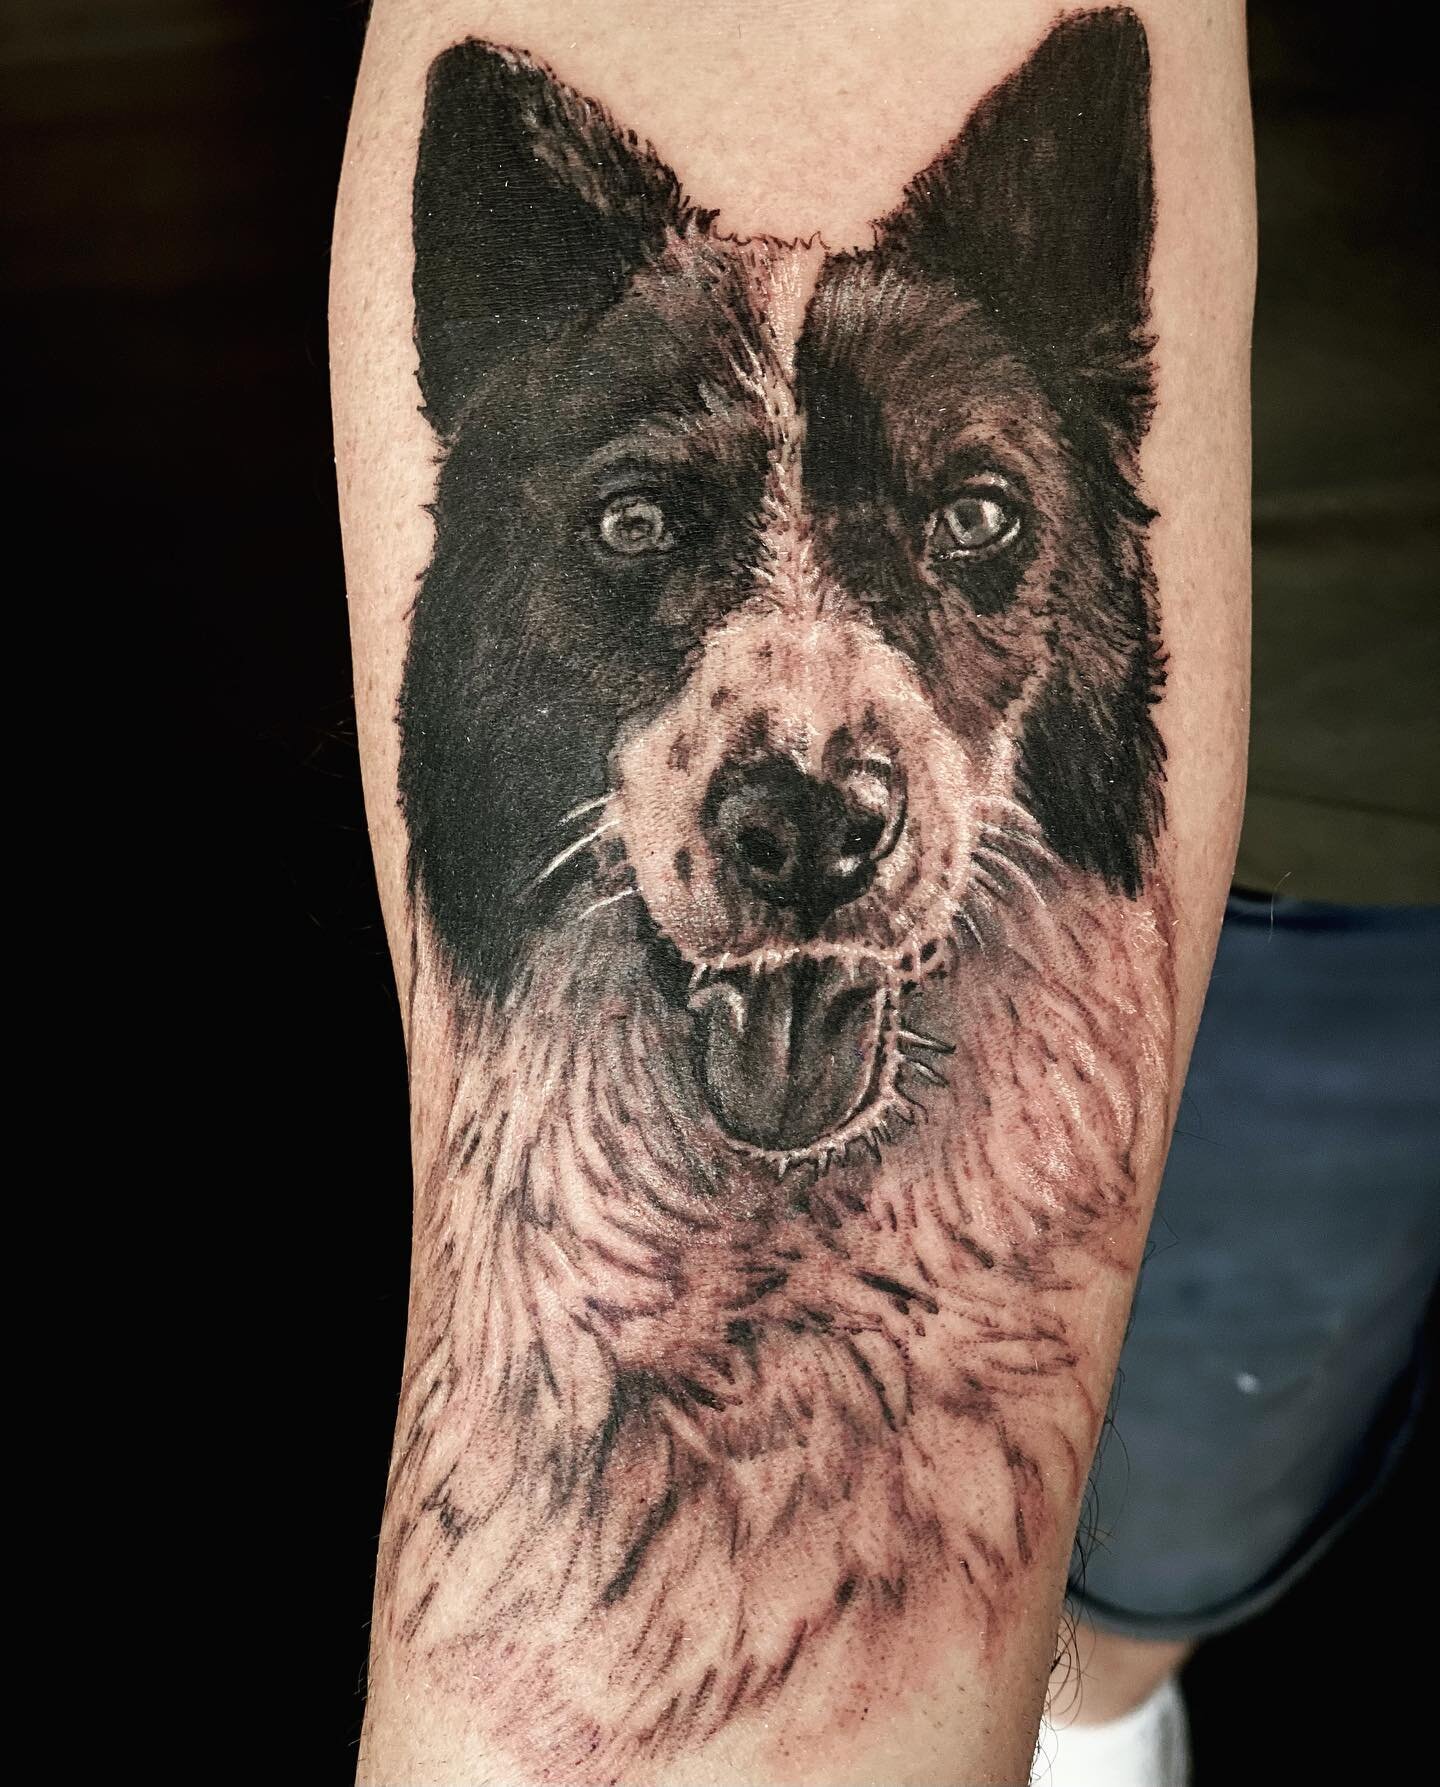 Dog portrait, thank Symon for trusting me with this. 
#portrait #blackandgreyportrait #blackandgreytattoo #dogoftheday #dog #bestfriend #rip #tattoo #tattooed #worthingtattoo #brightontattoo